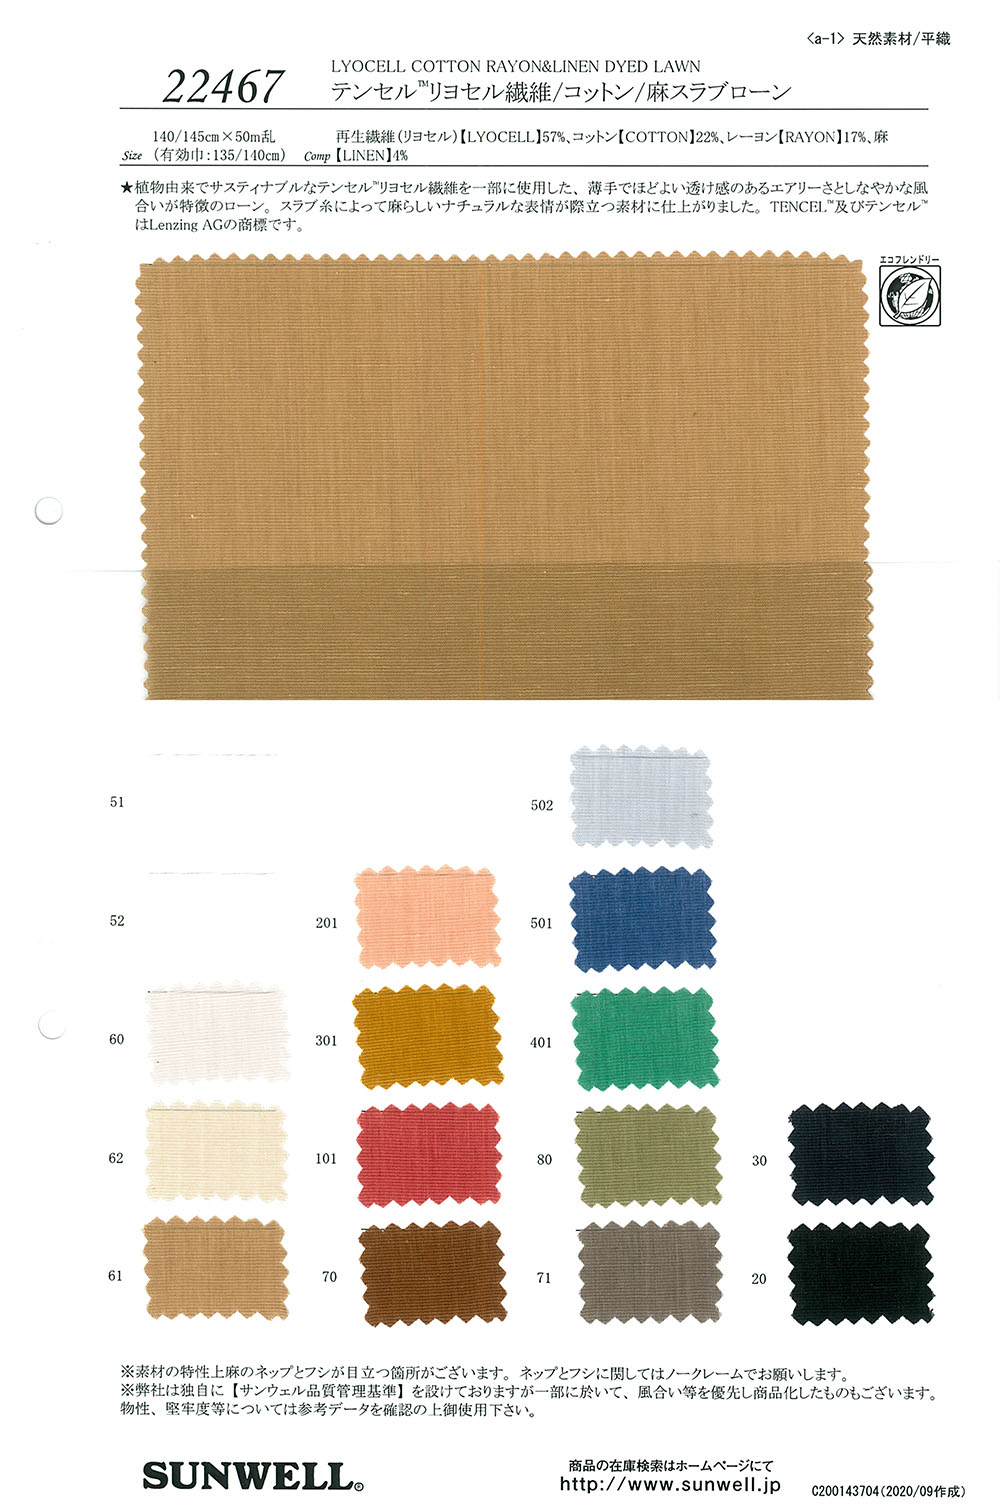 22467 Tencel (TM) Lyocell Fiber/Cotton/ Linen Slab Lawn[Textile / Fabric] SUNWELL